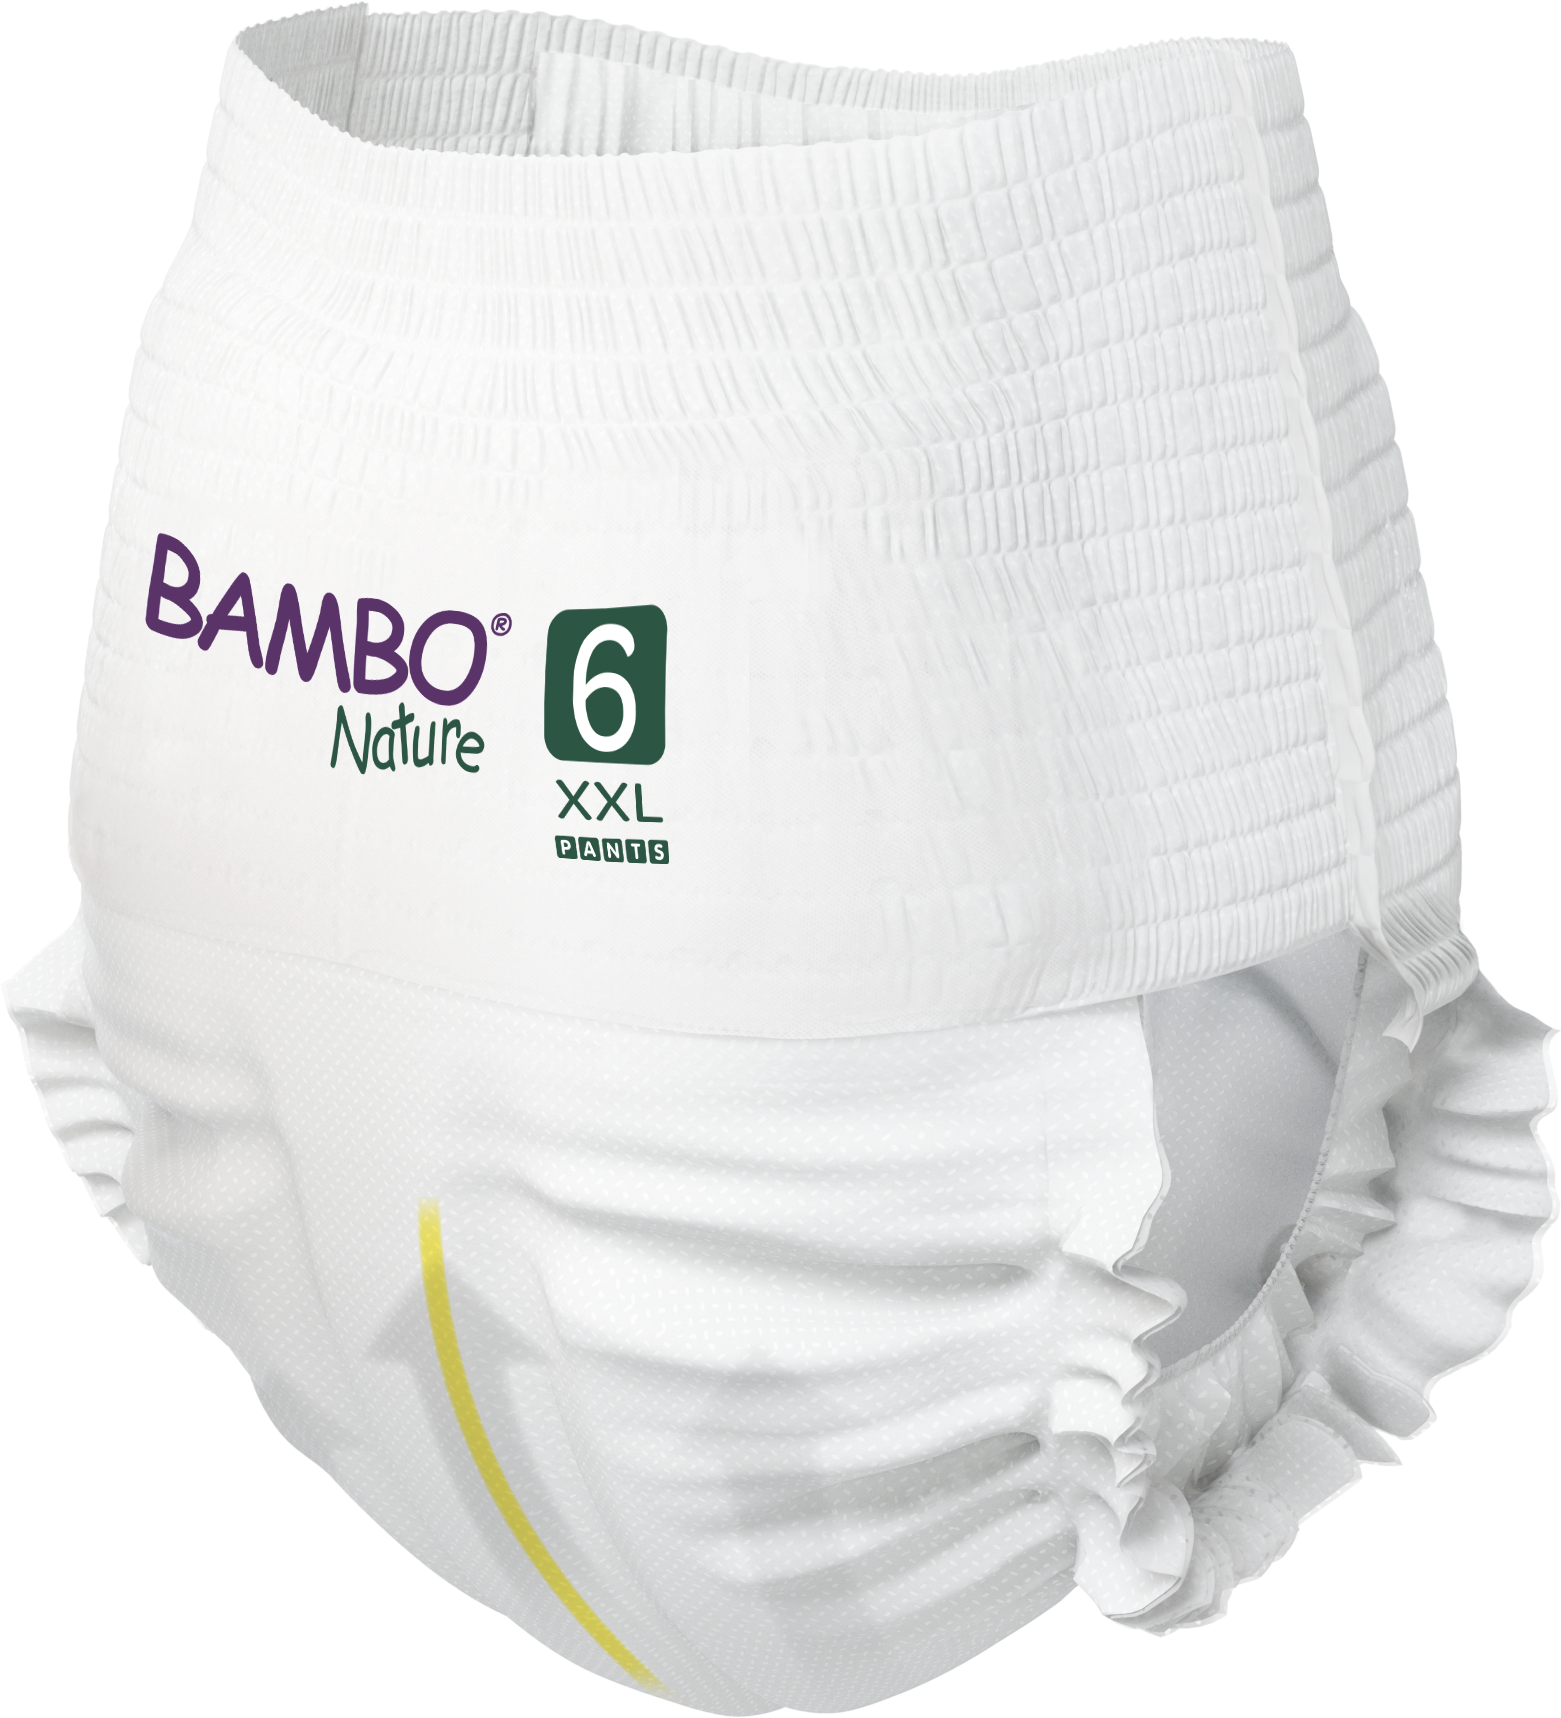 Bambo Nature Training Pants, Size 5, 26-44 Lbs.